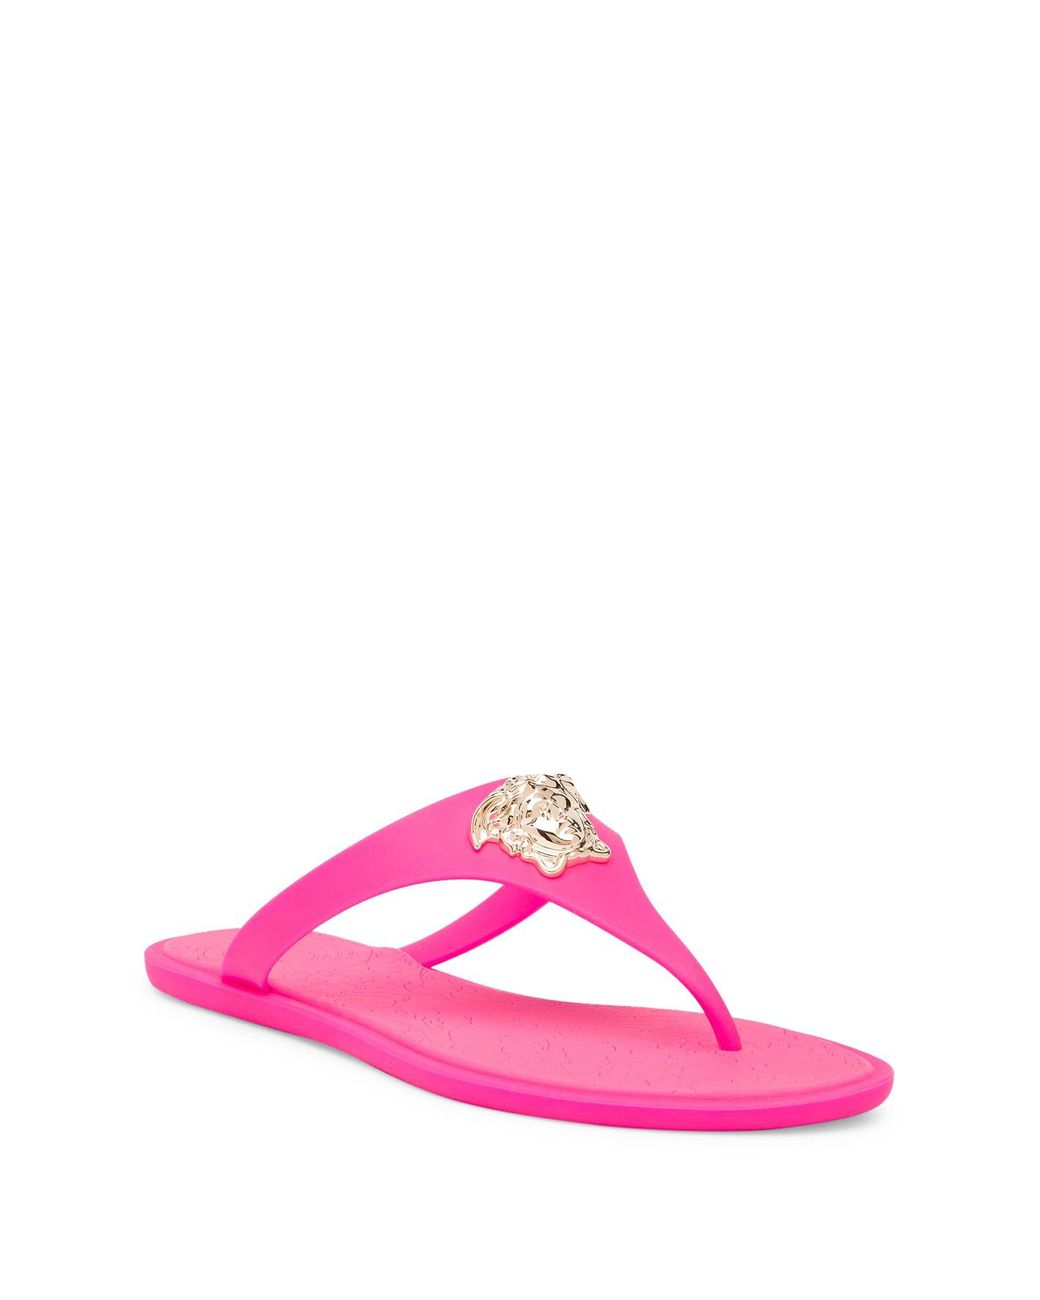 Versace Medusa Thong Sandal in Pink | Lyst